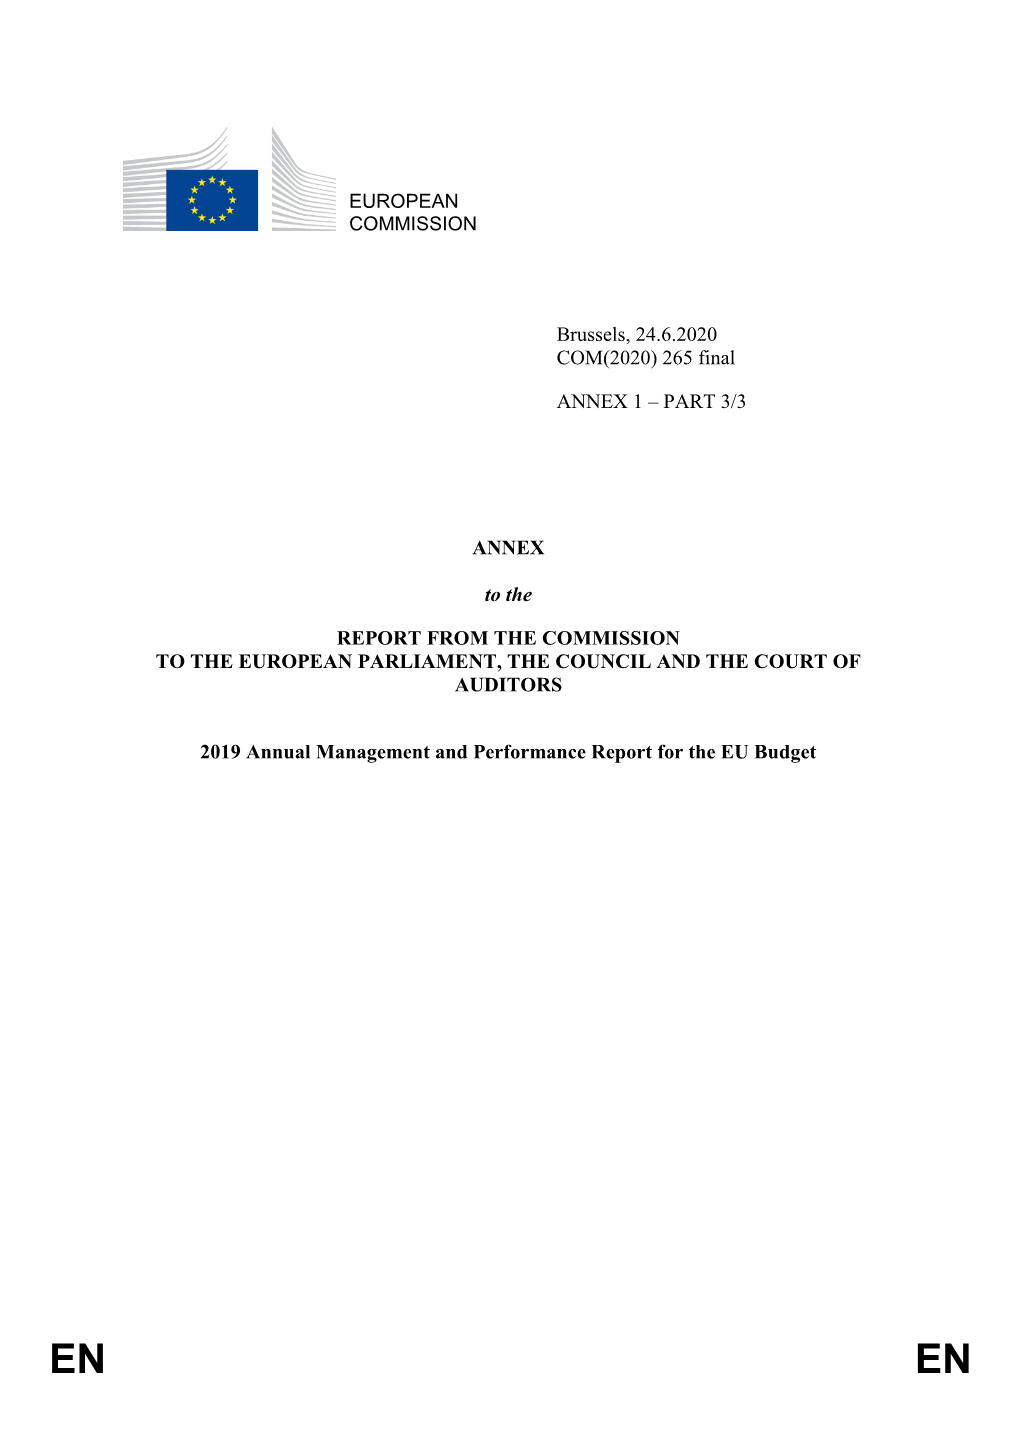 EUROPEAN COMMISSION Brussels, 24.6.2020